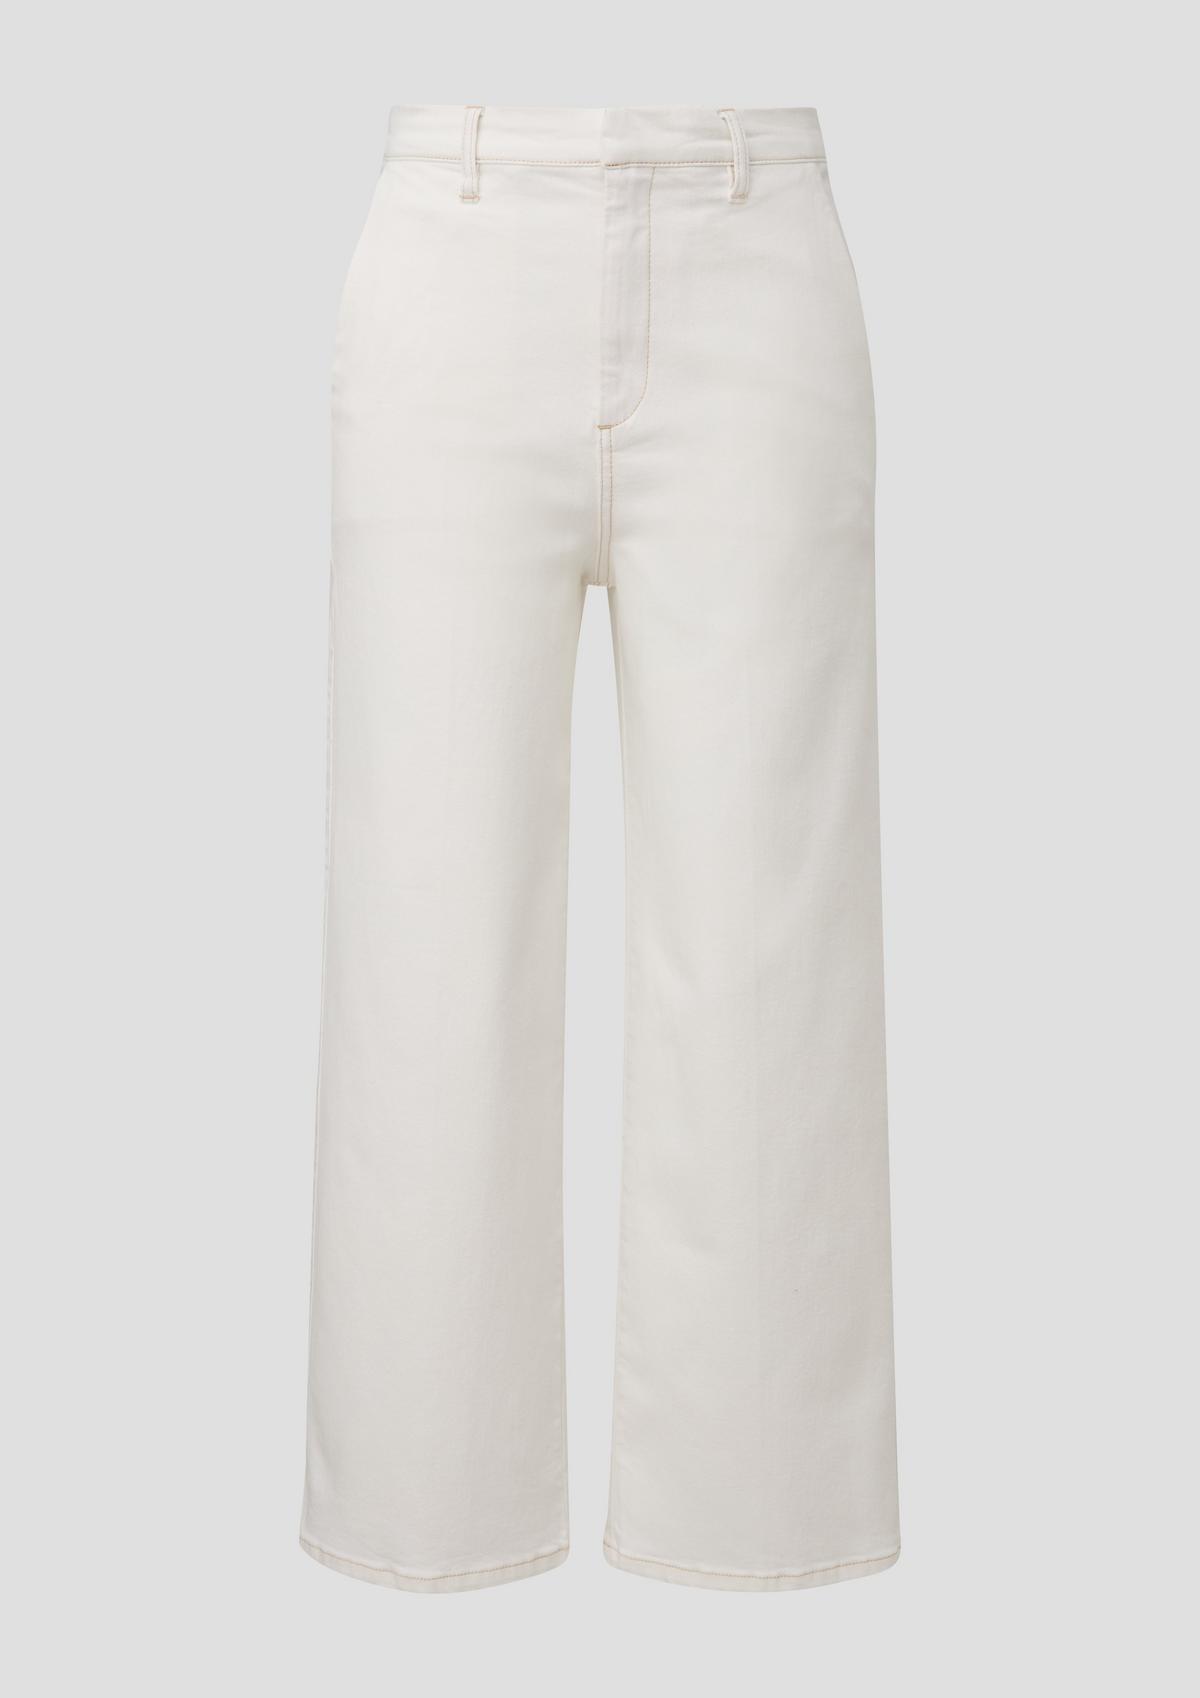 s.Oliver Suri jeans / regular fit / high rise / wide leg / stretch cotton